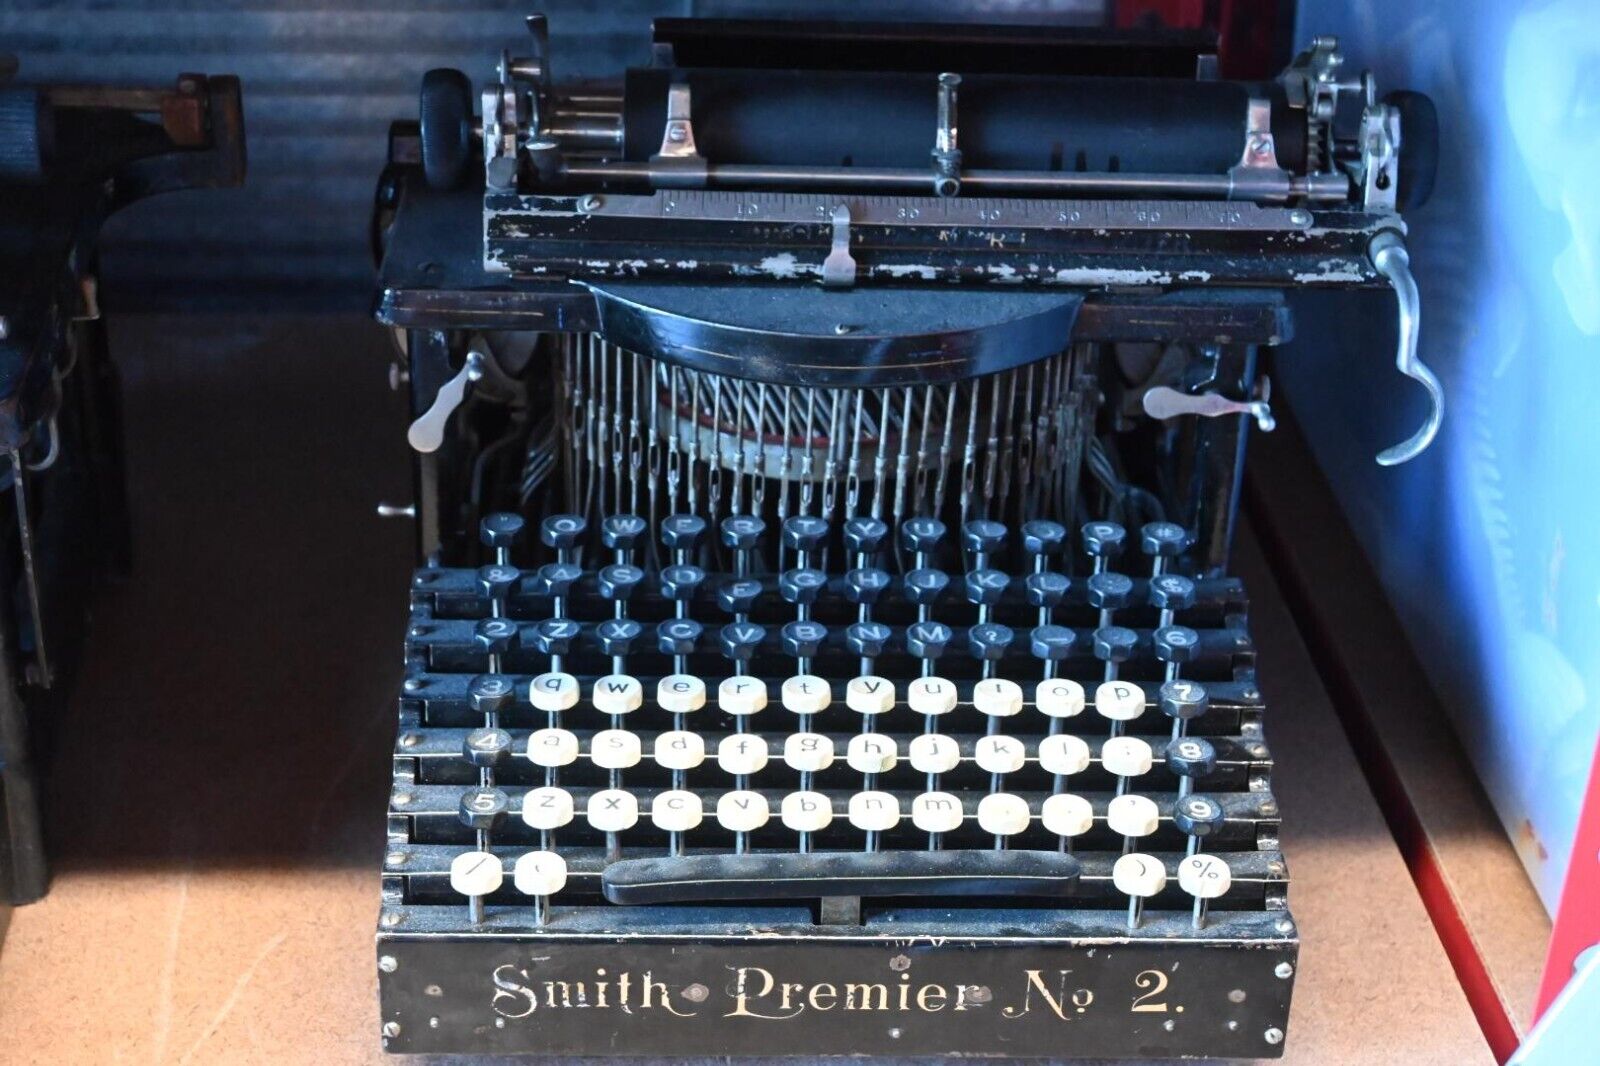 Vintage Smith Premier No. 2 Typewriter